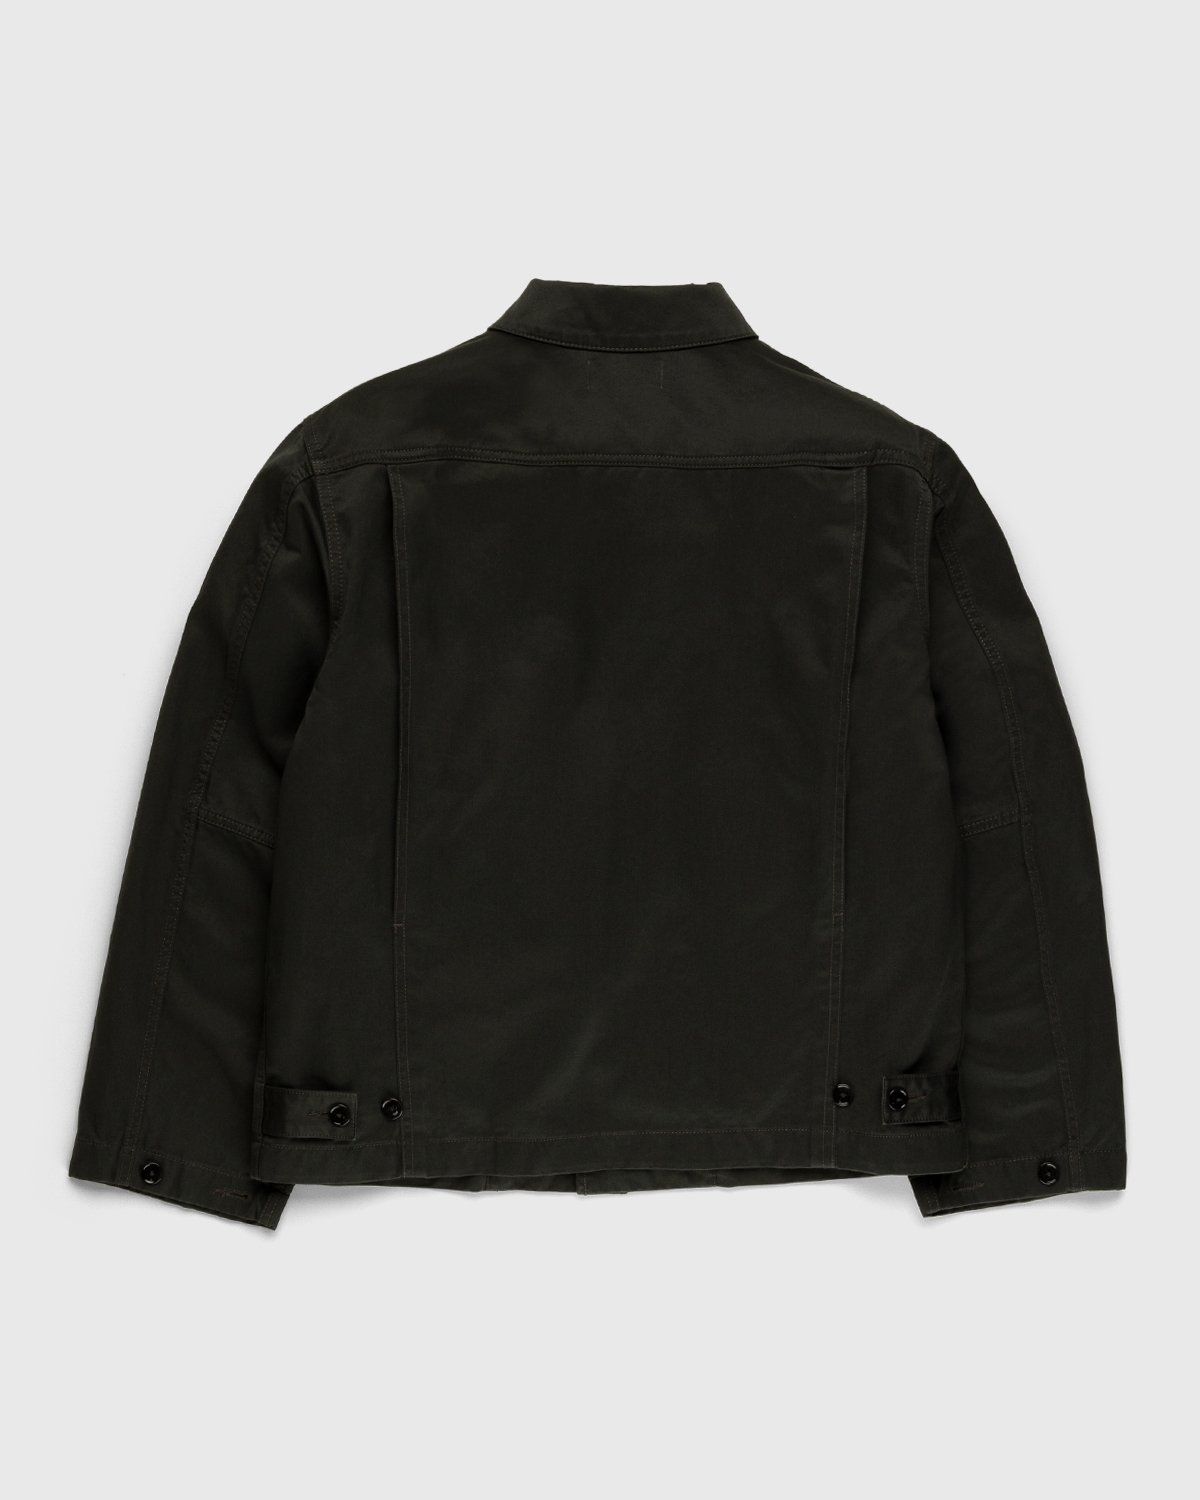 Lemaire – Boxy Blouson Dark Slate Green - Outerwear - Grey - Image 2